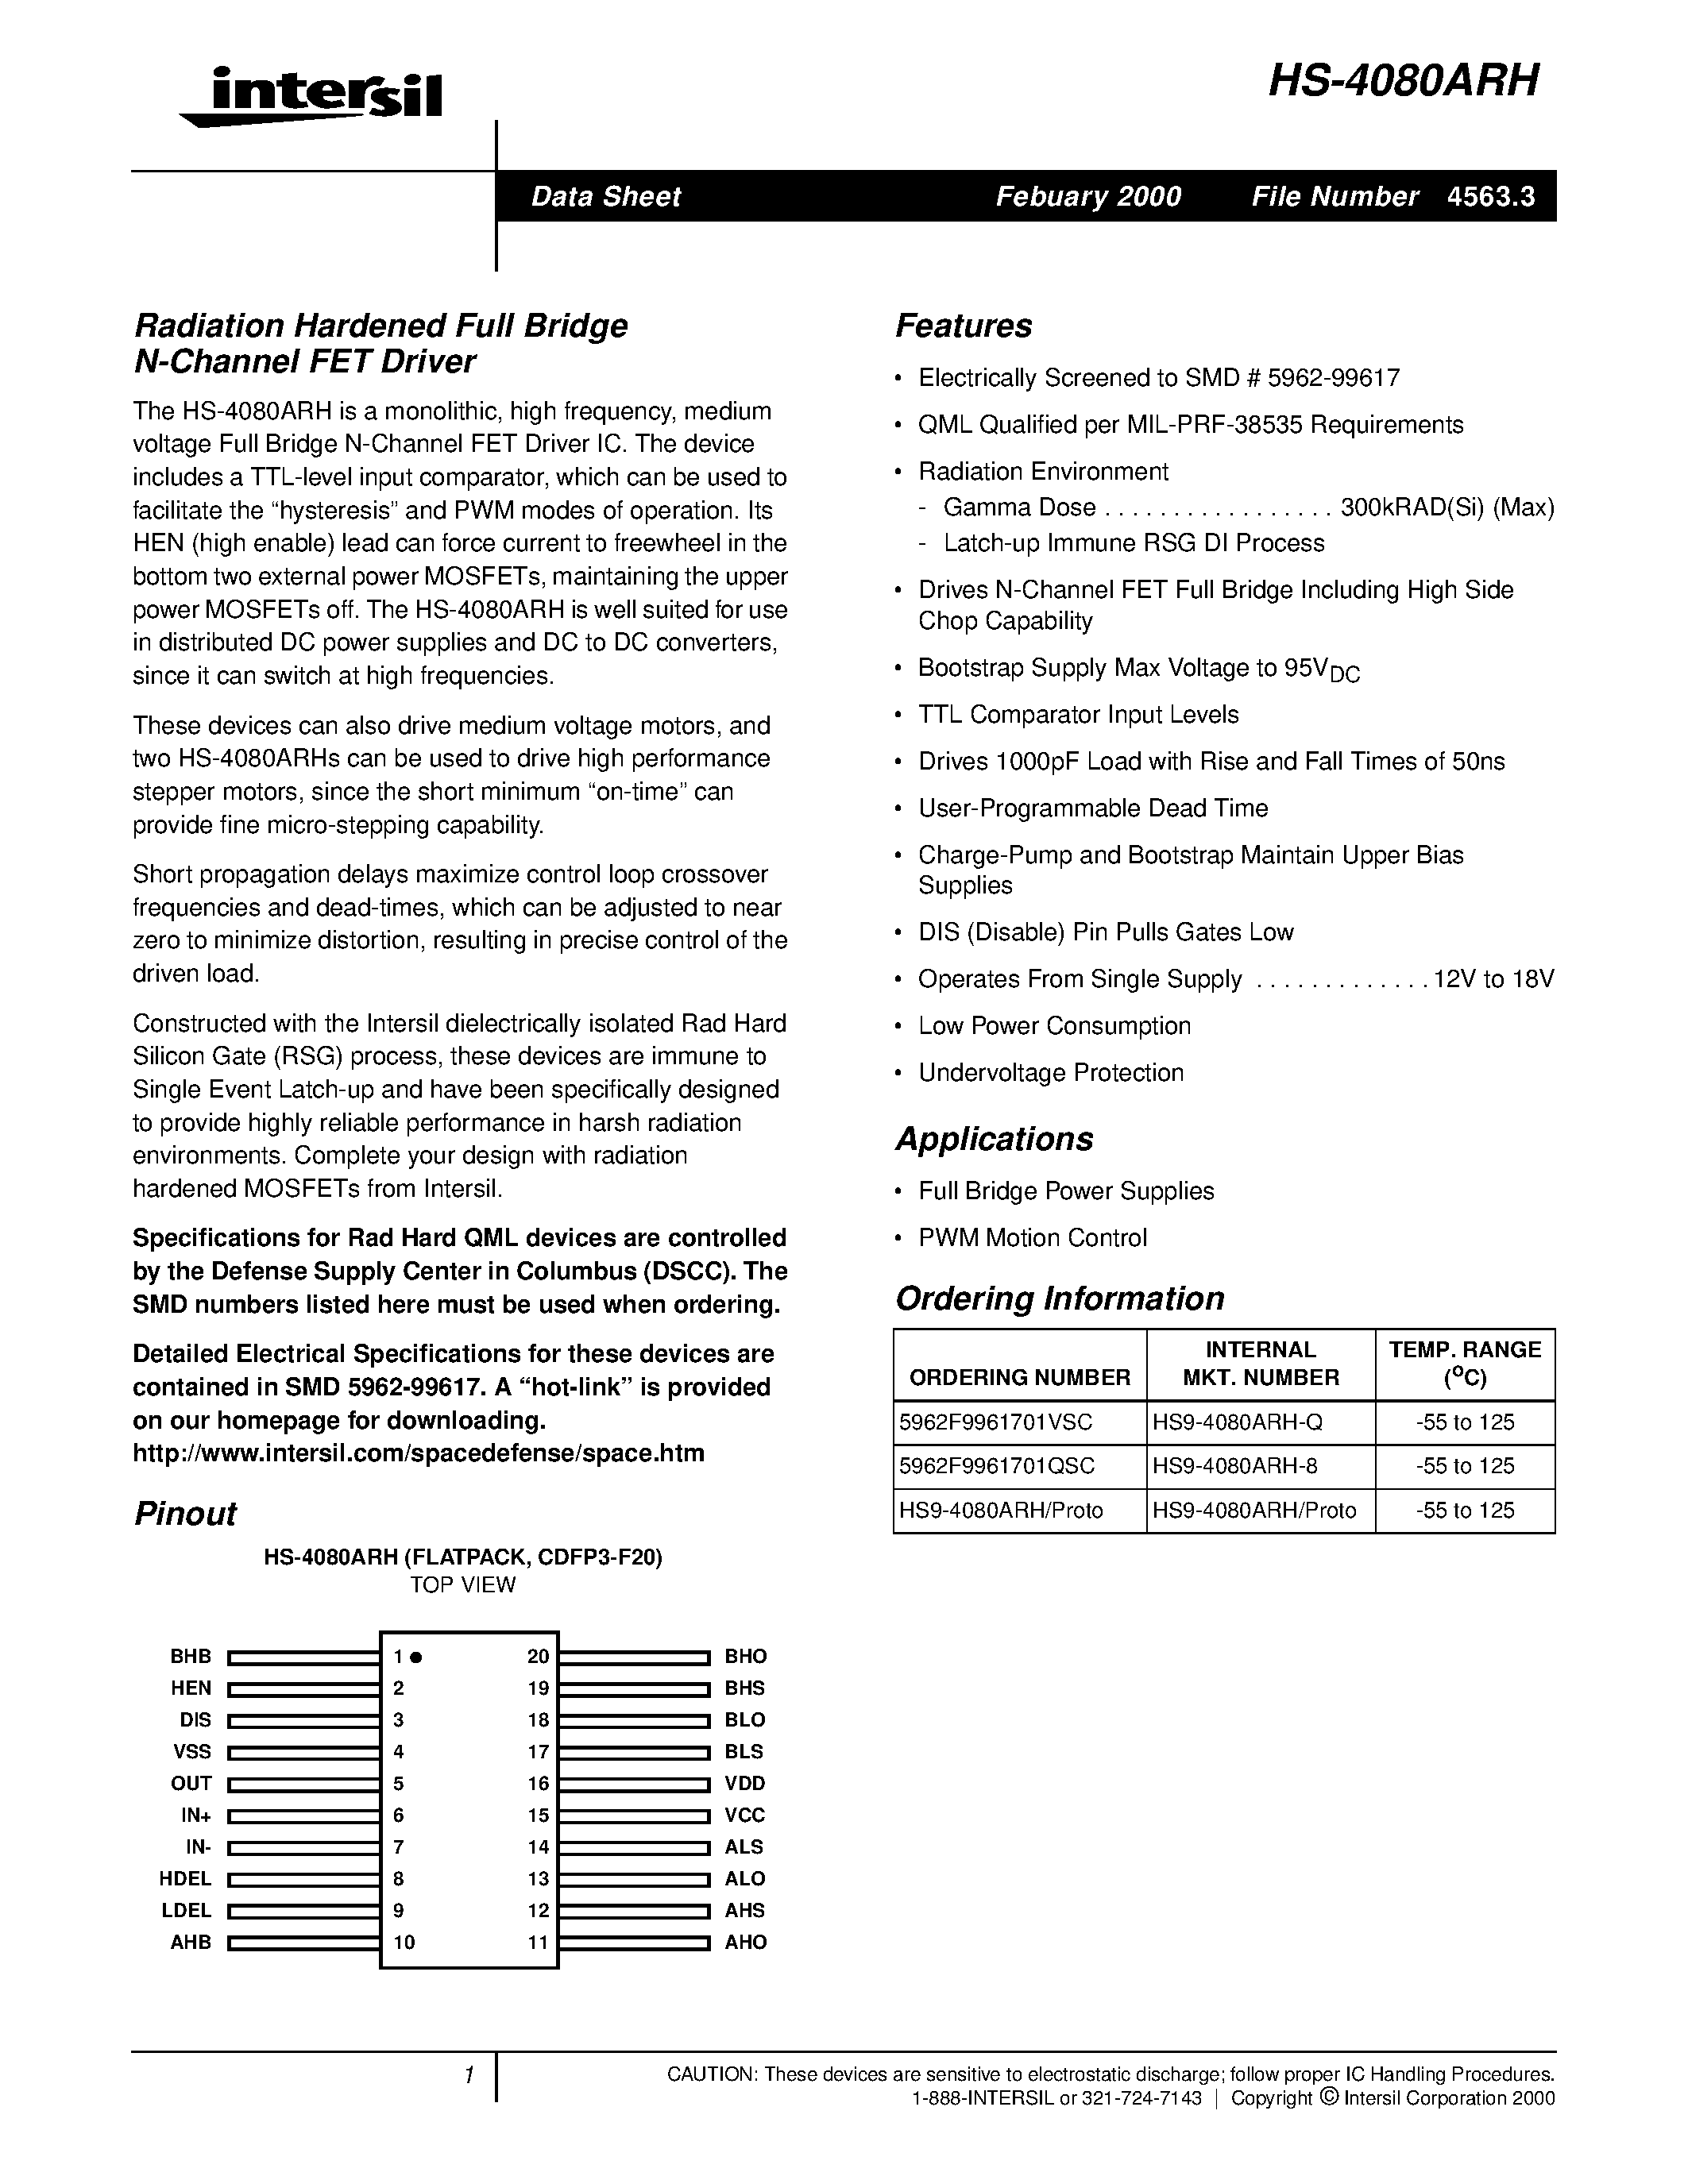 Datasheet HS9-4080ARH-Q - Radiation Hardened Full Bridge N-Channel FET Driver page 1